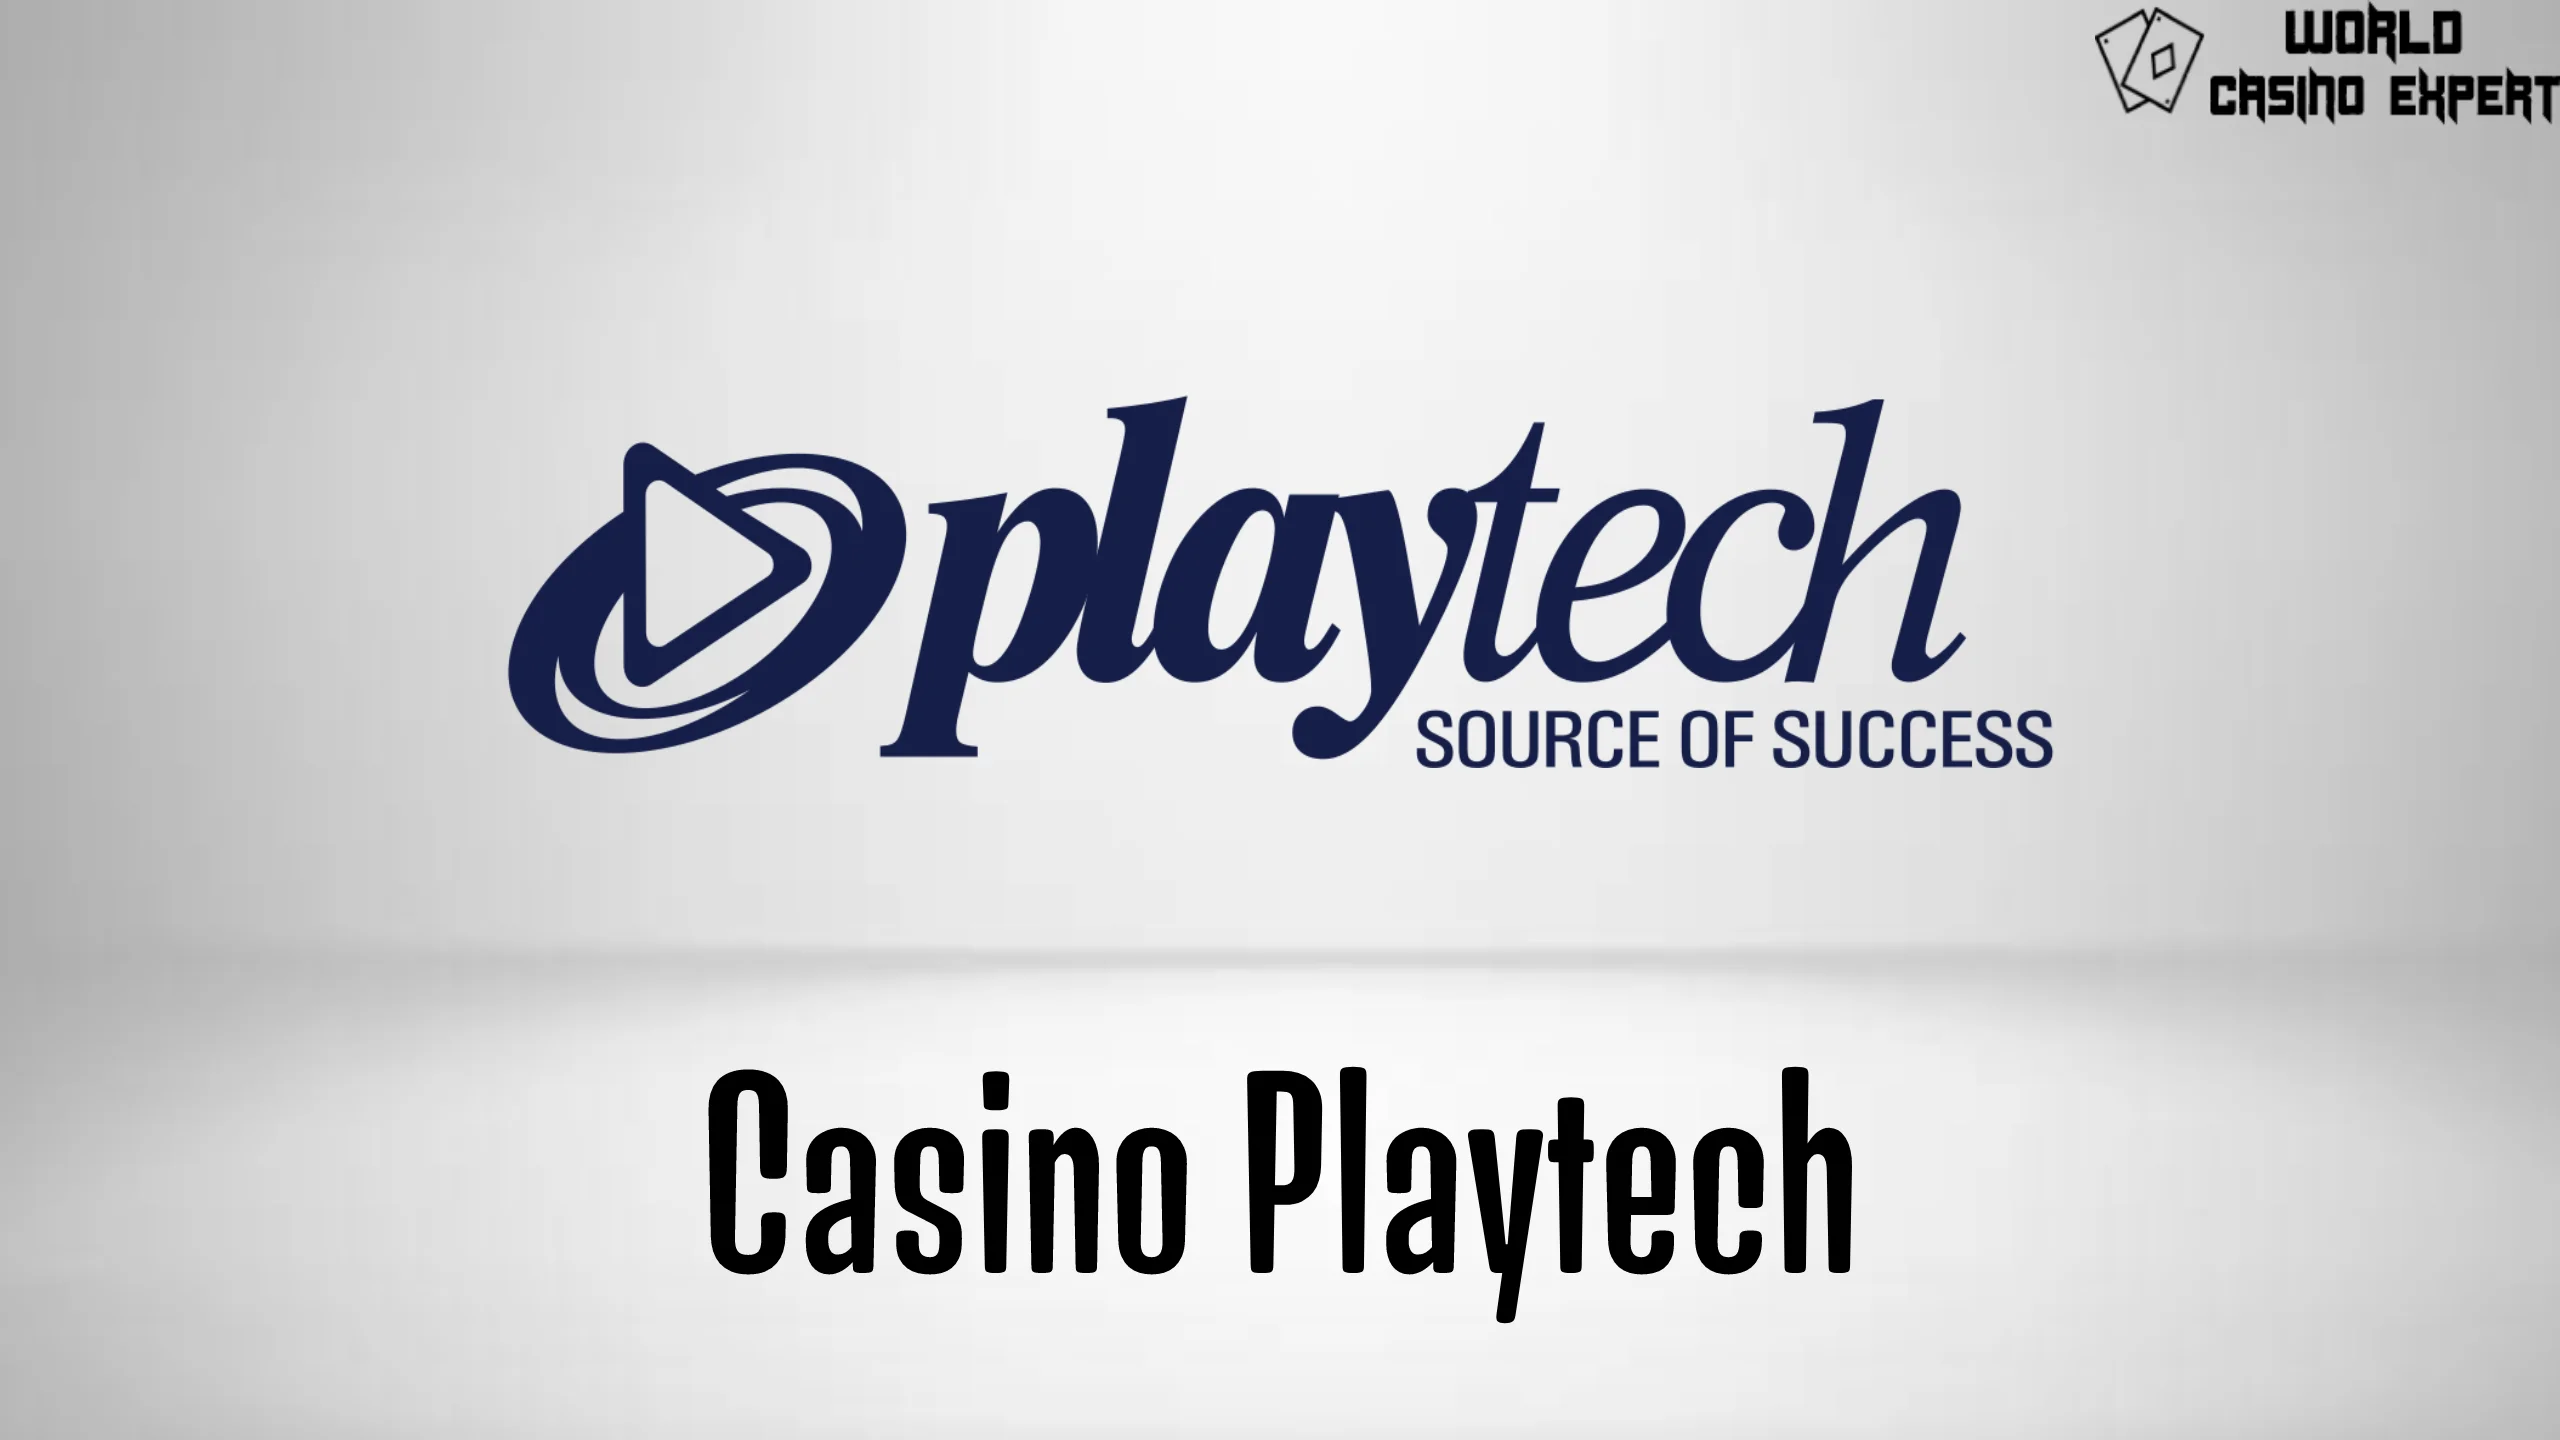 Casino Playtech | World Casino Expert Brasil